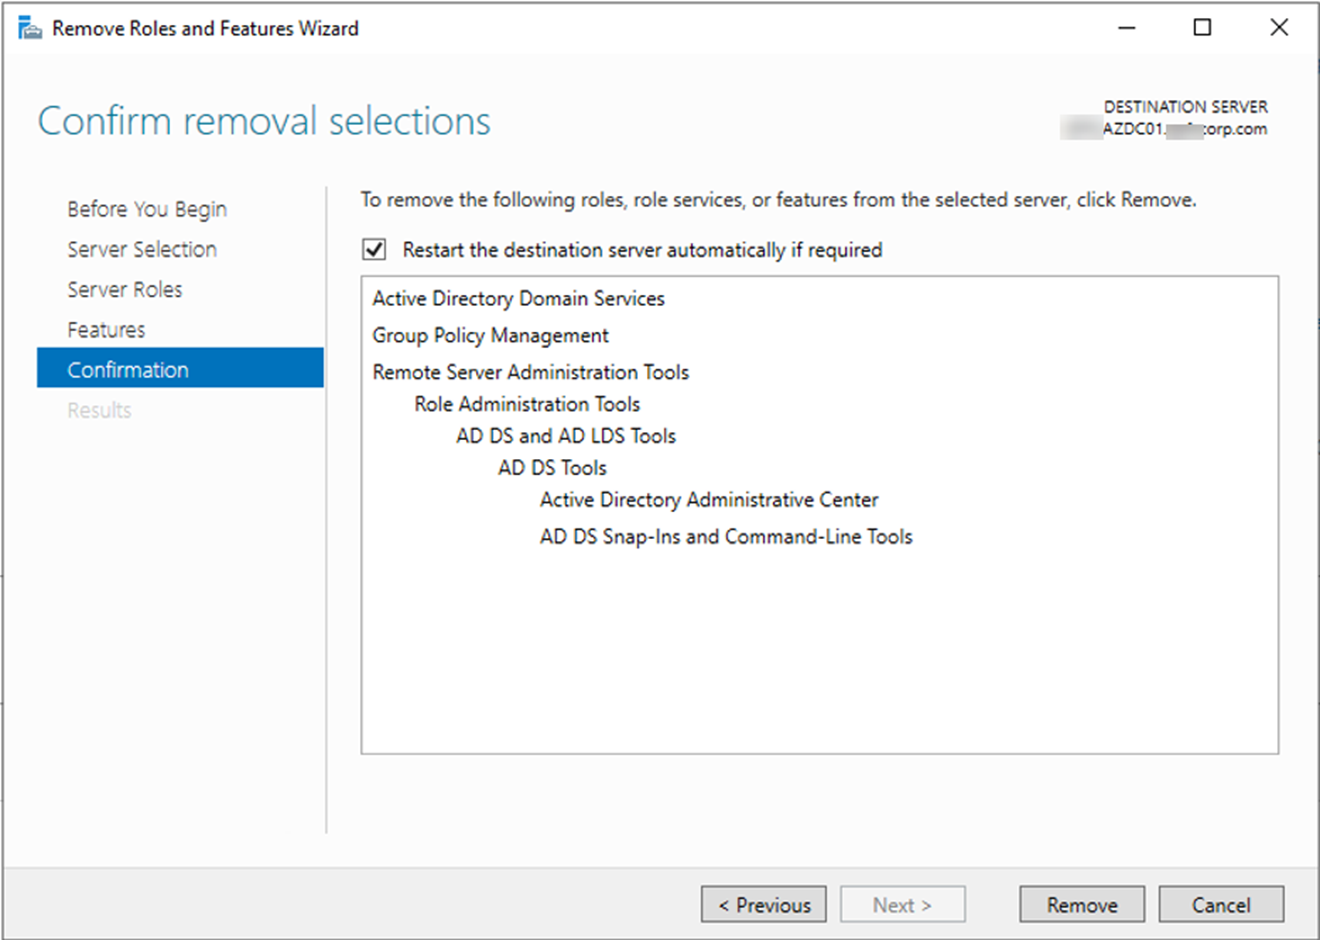 101120 0520 HowtoDemote25 - How to Demote Microsoft Windows Server 2019 Domain Controller Virtual Machine at Azure